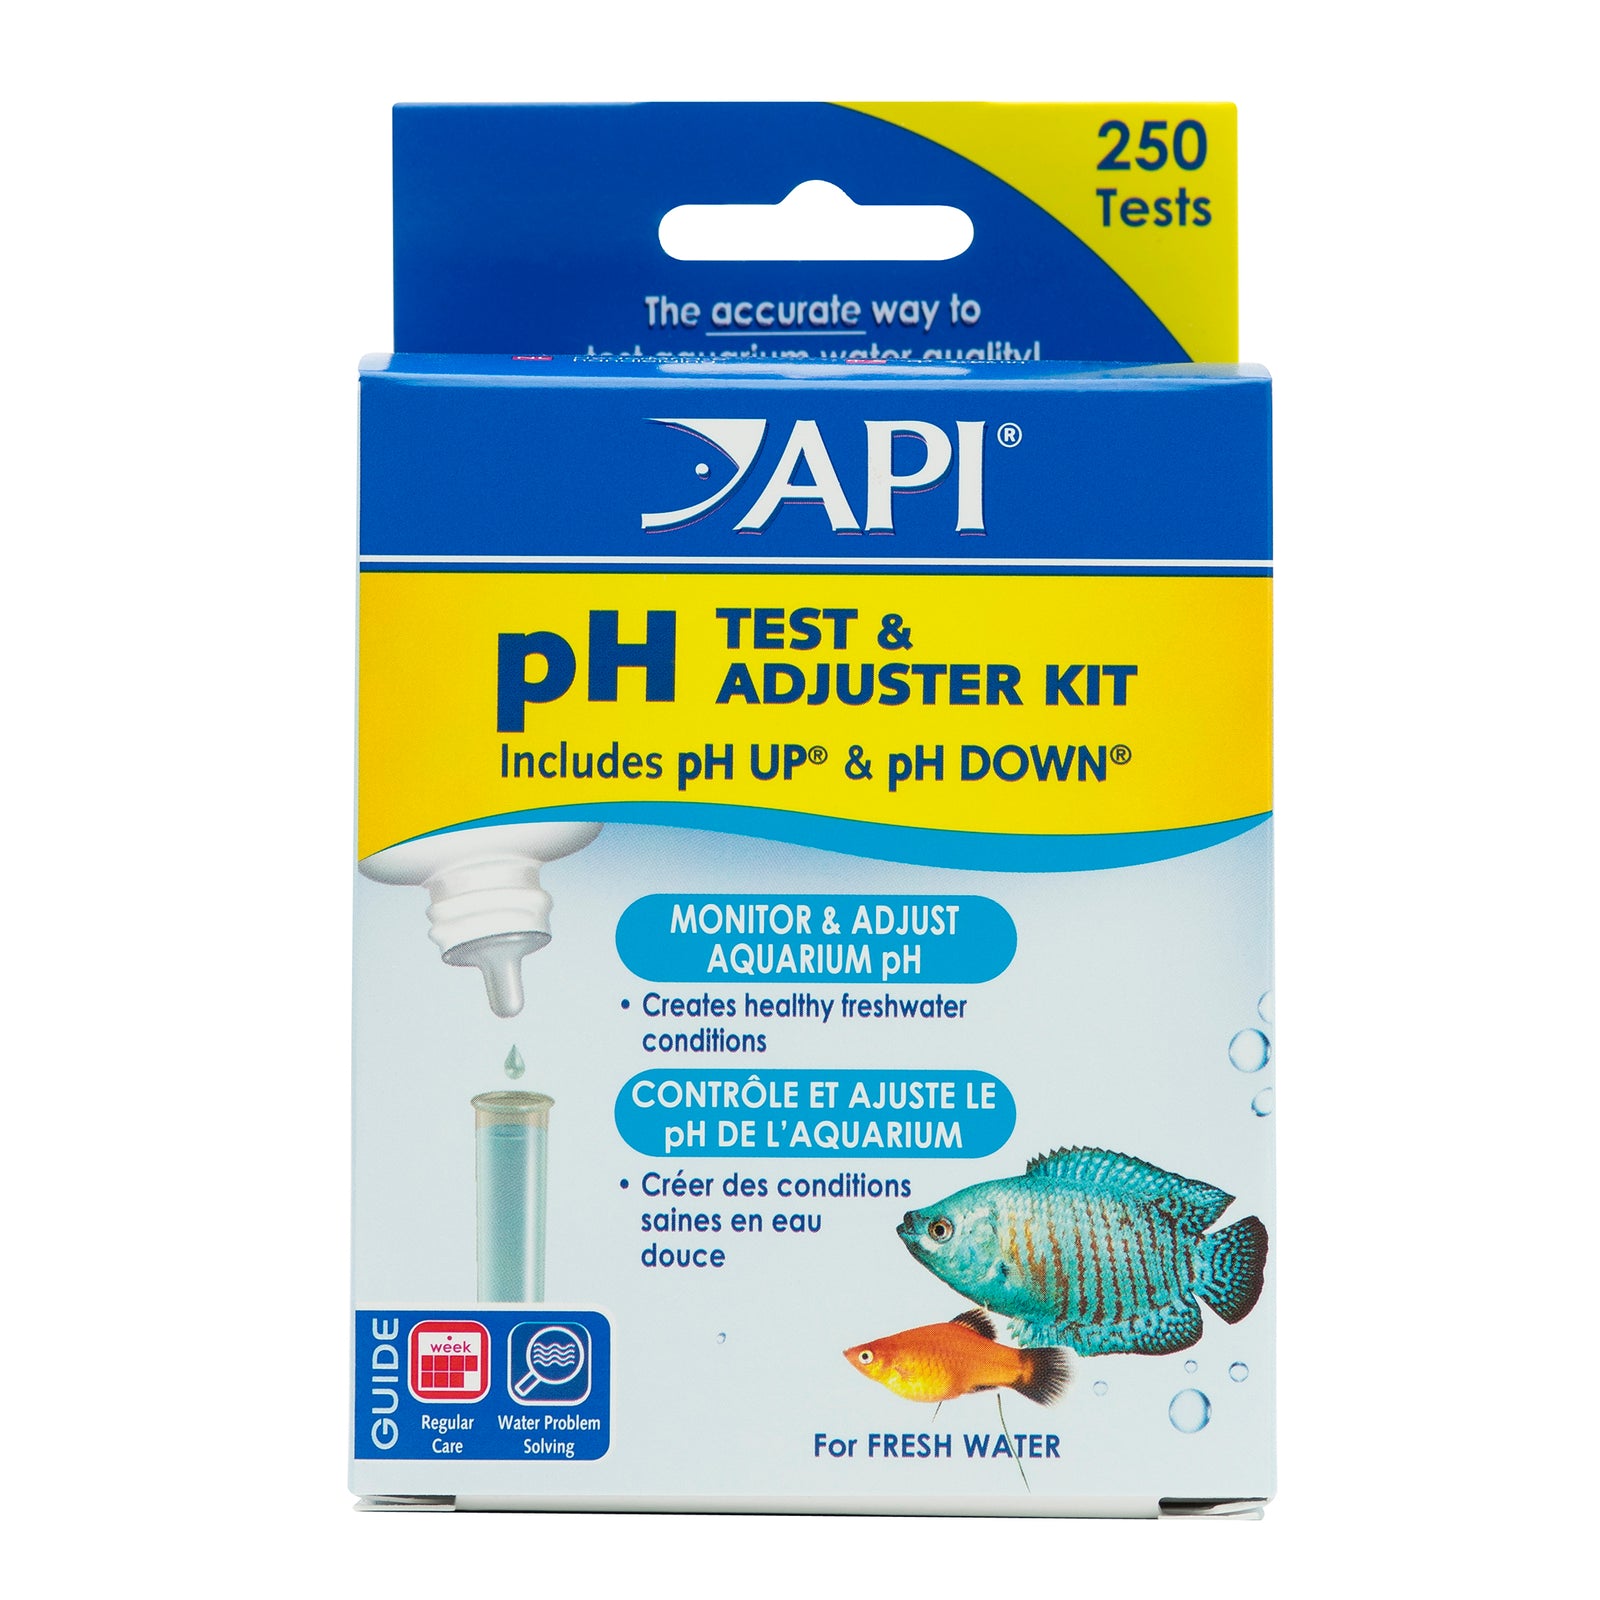 API Ph Test & Adjuster Kit 250-Test Freshwater Aquarium Water Ph Test And Adjuster Kit